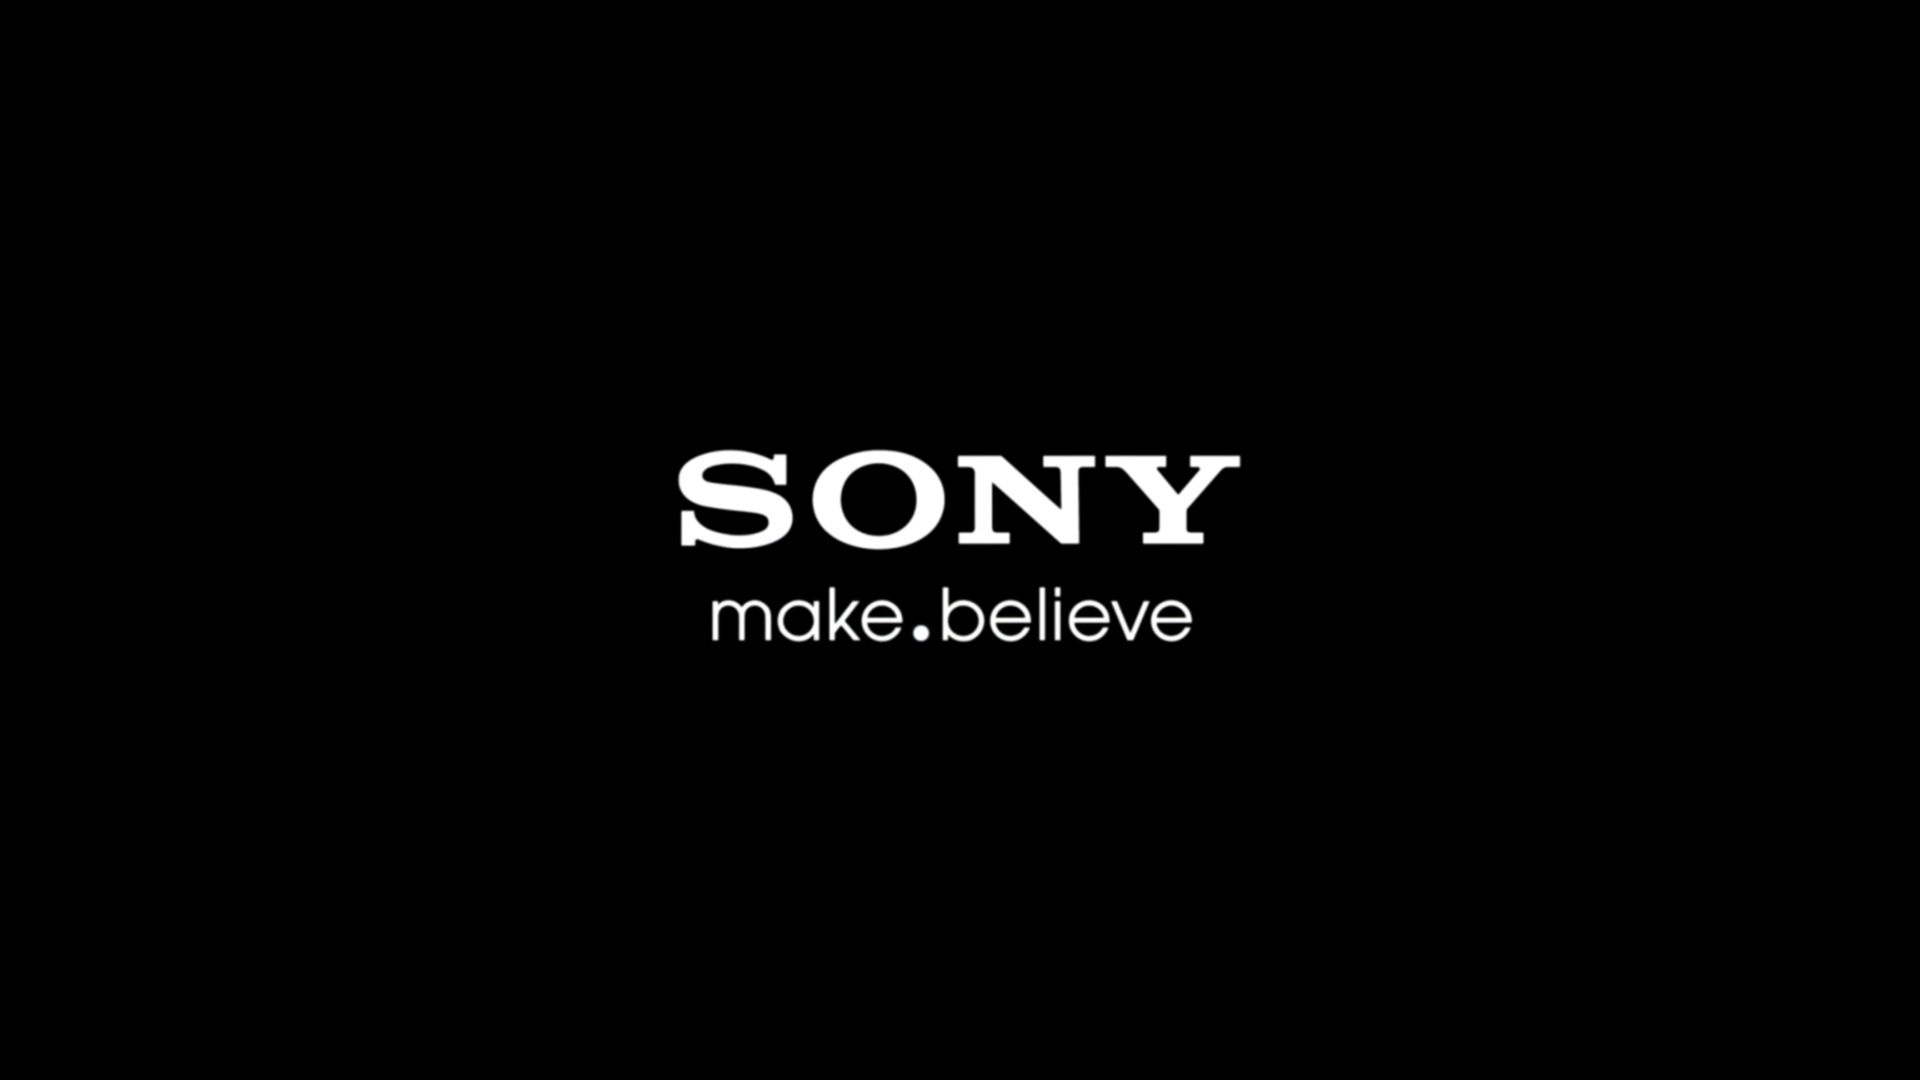 sony believe, logo Wallpaper & Background Image